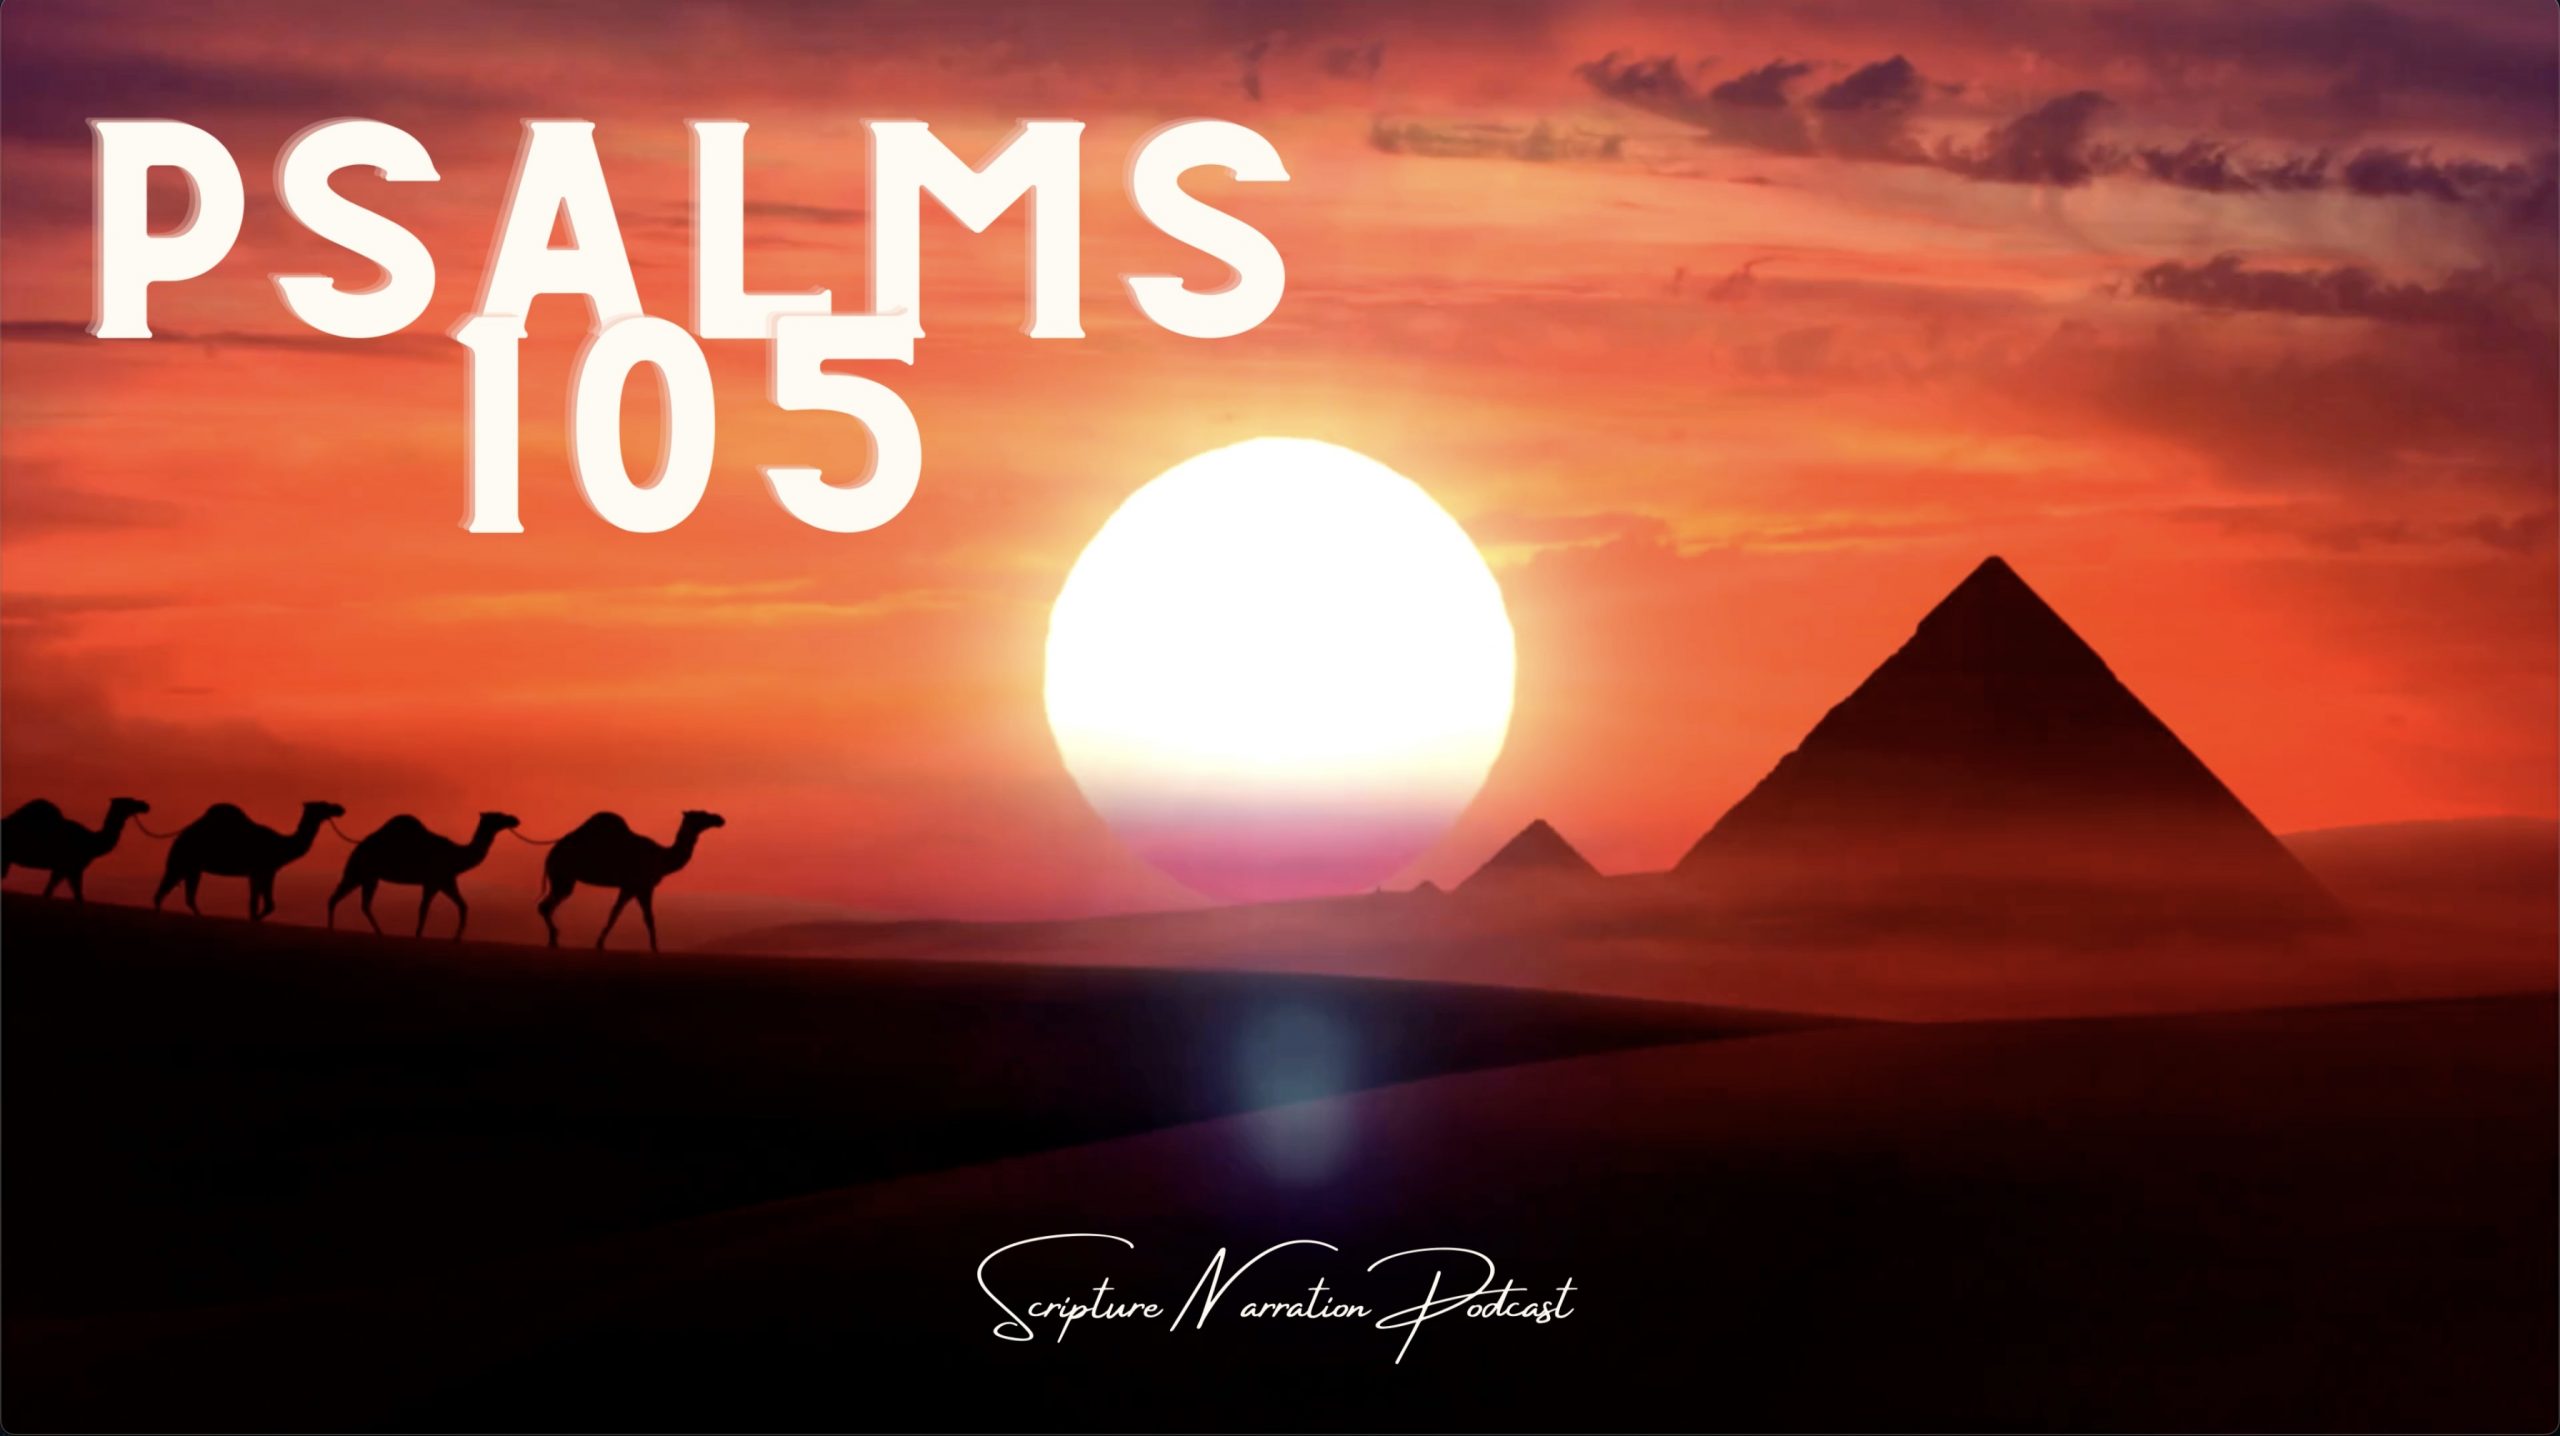 PSALMS (TEHILLIM) 105